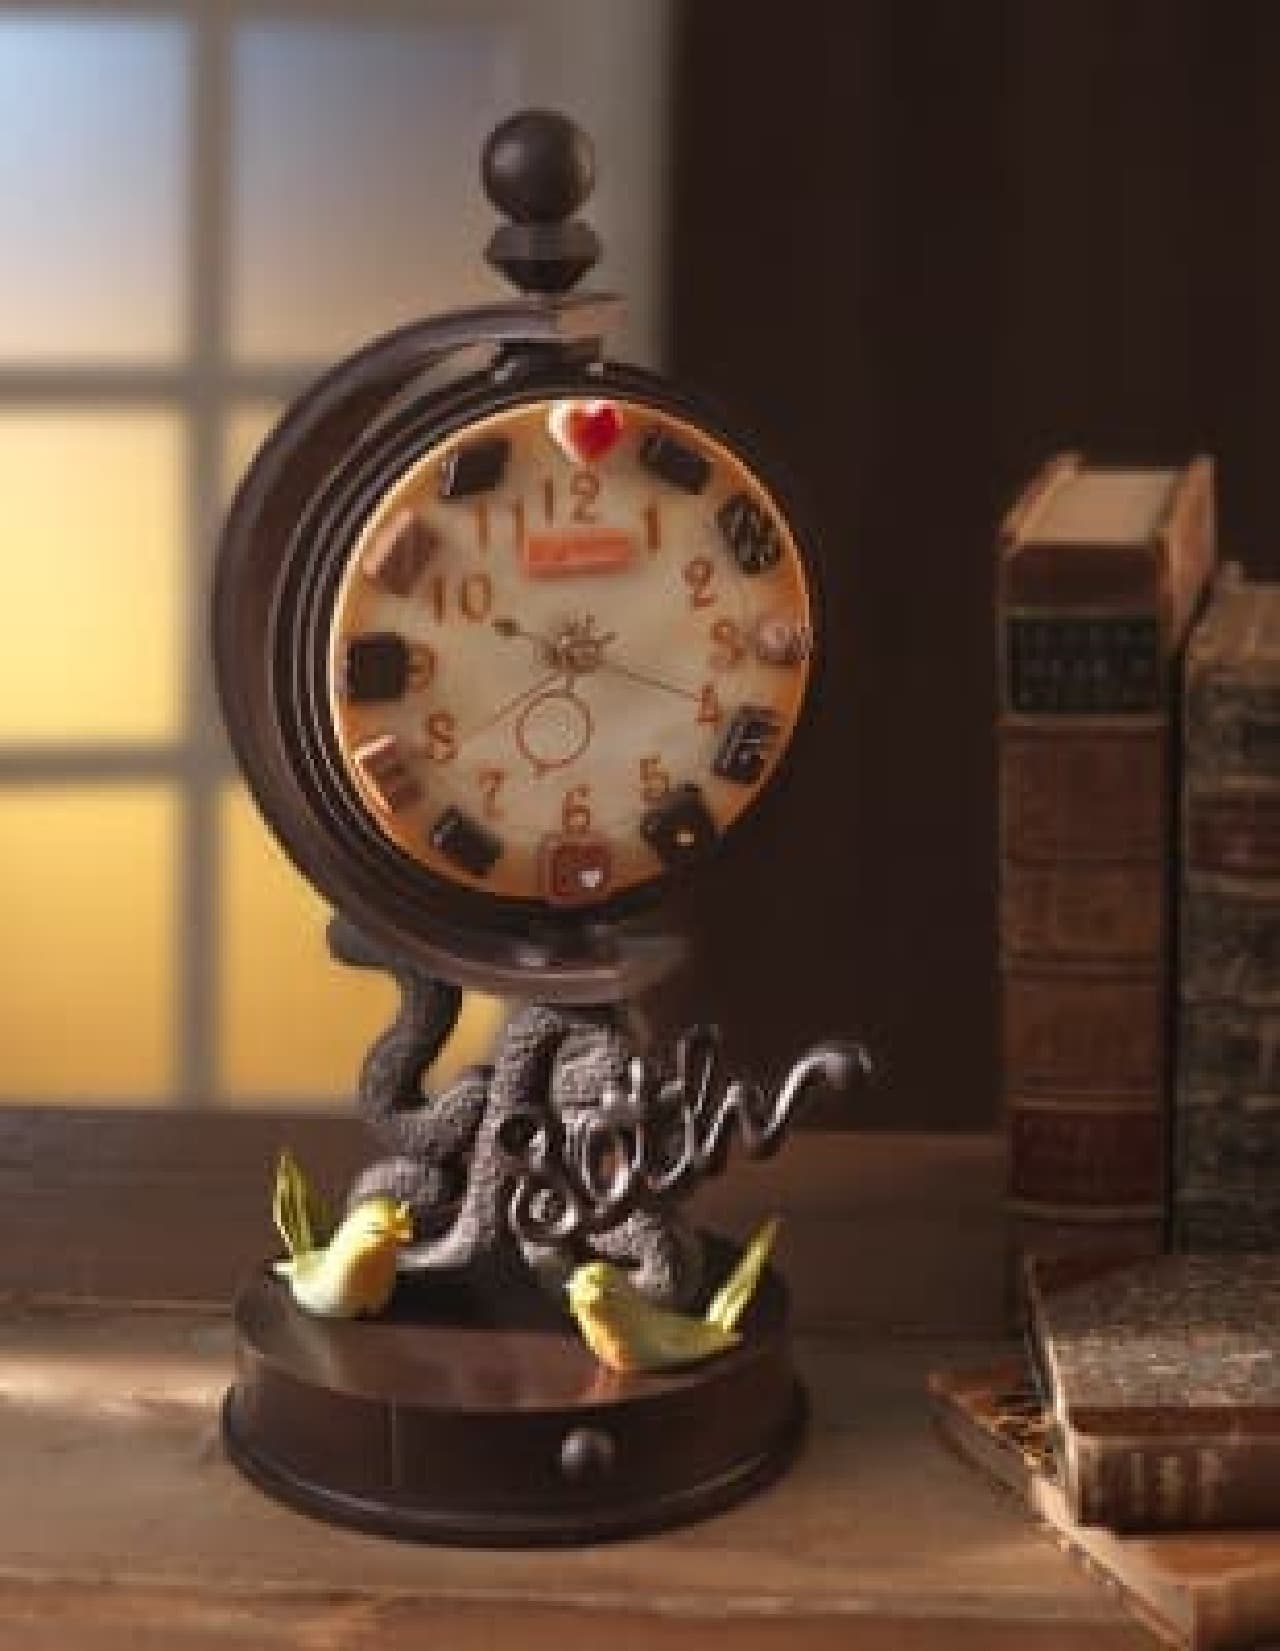 Introducing a cute retro clock made of chocolate